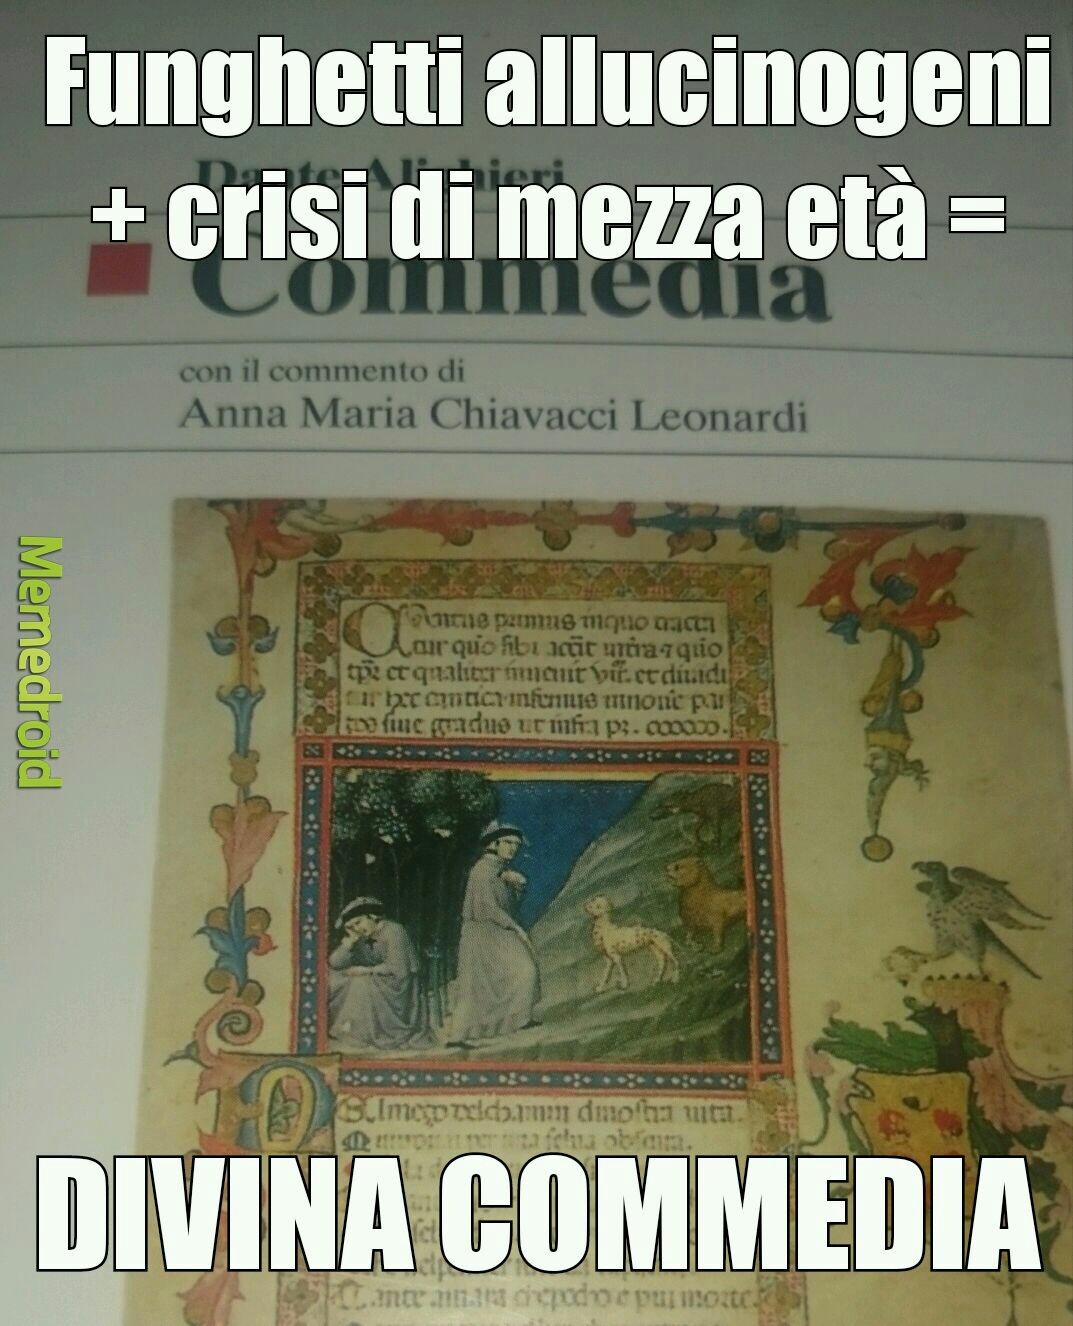 La "Divina" Commedia - meme